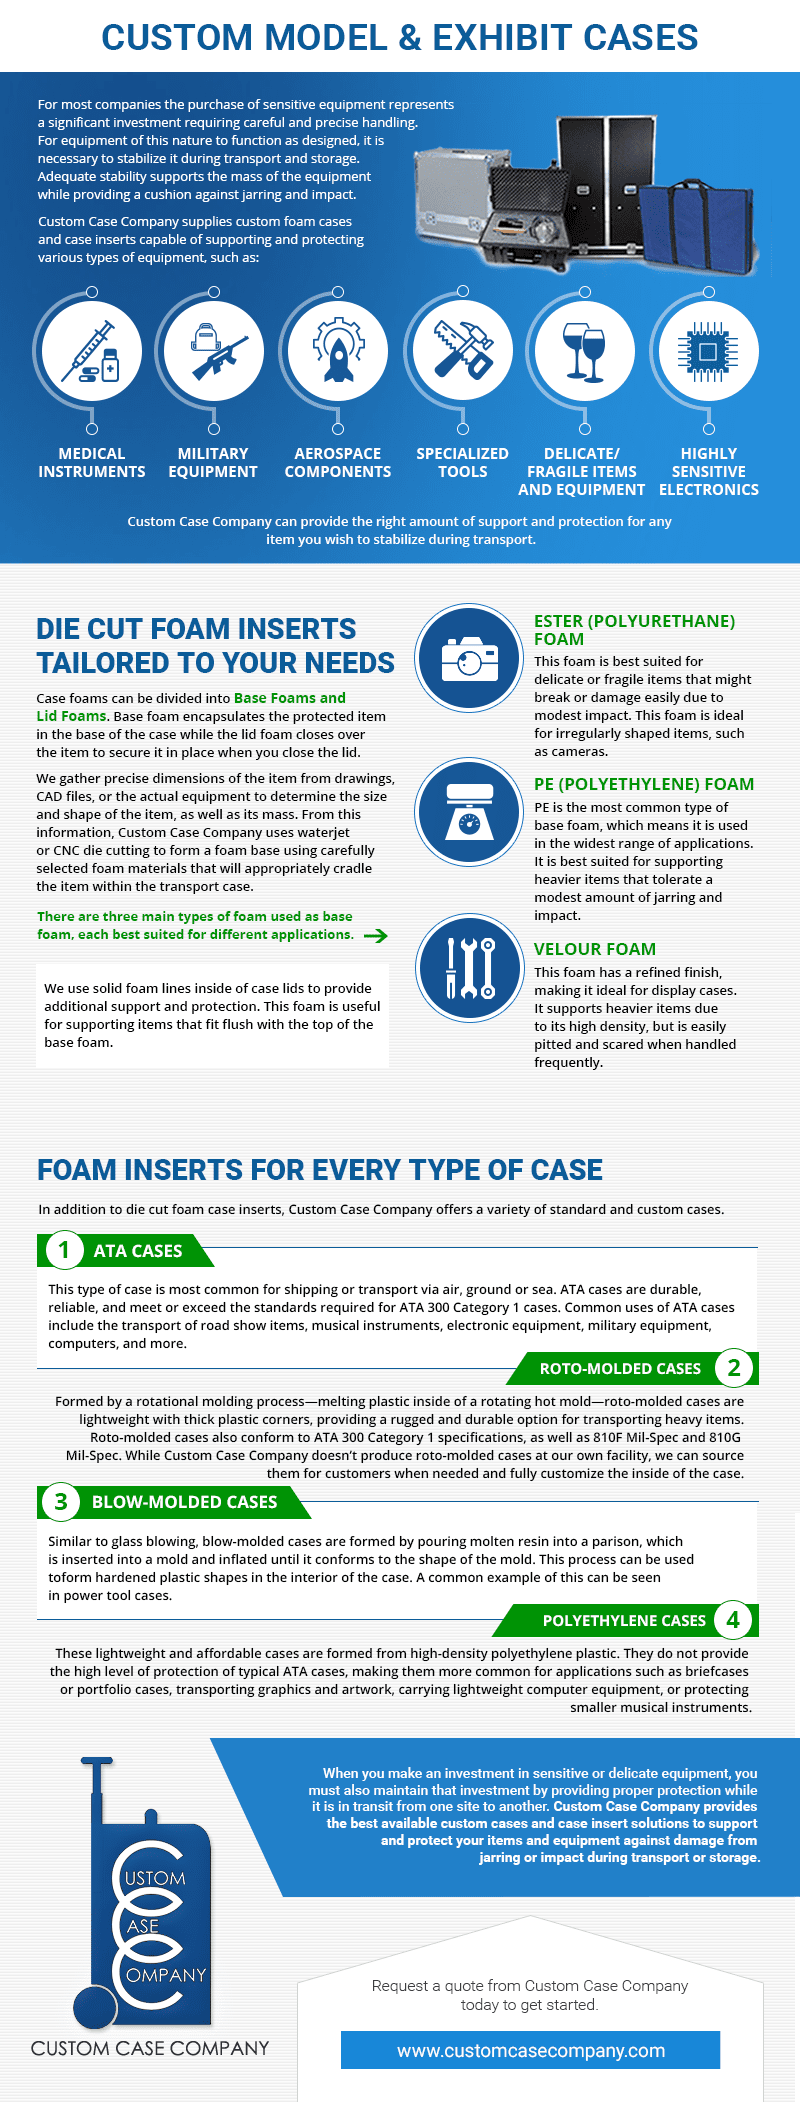 Custom Foam Inserts and Cases 